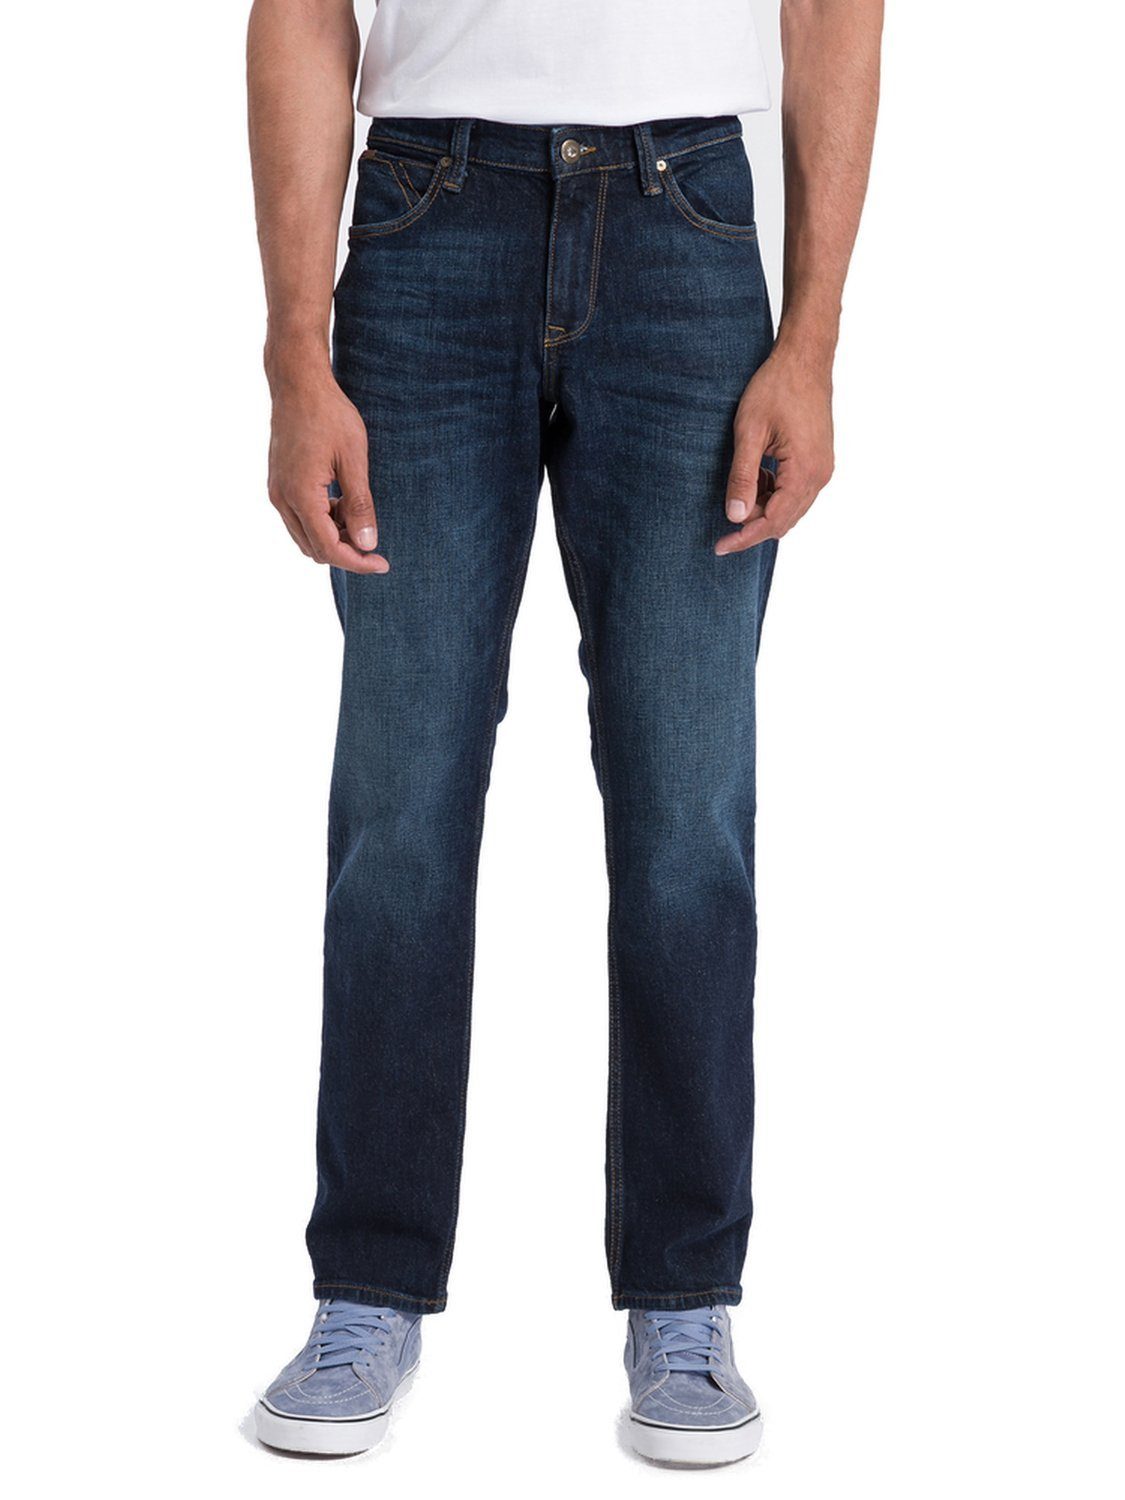 DYLAN Straight-Jeans Baumwolle JEANS® aus CROSS